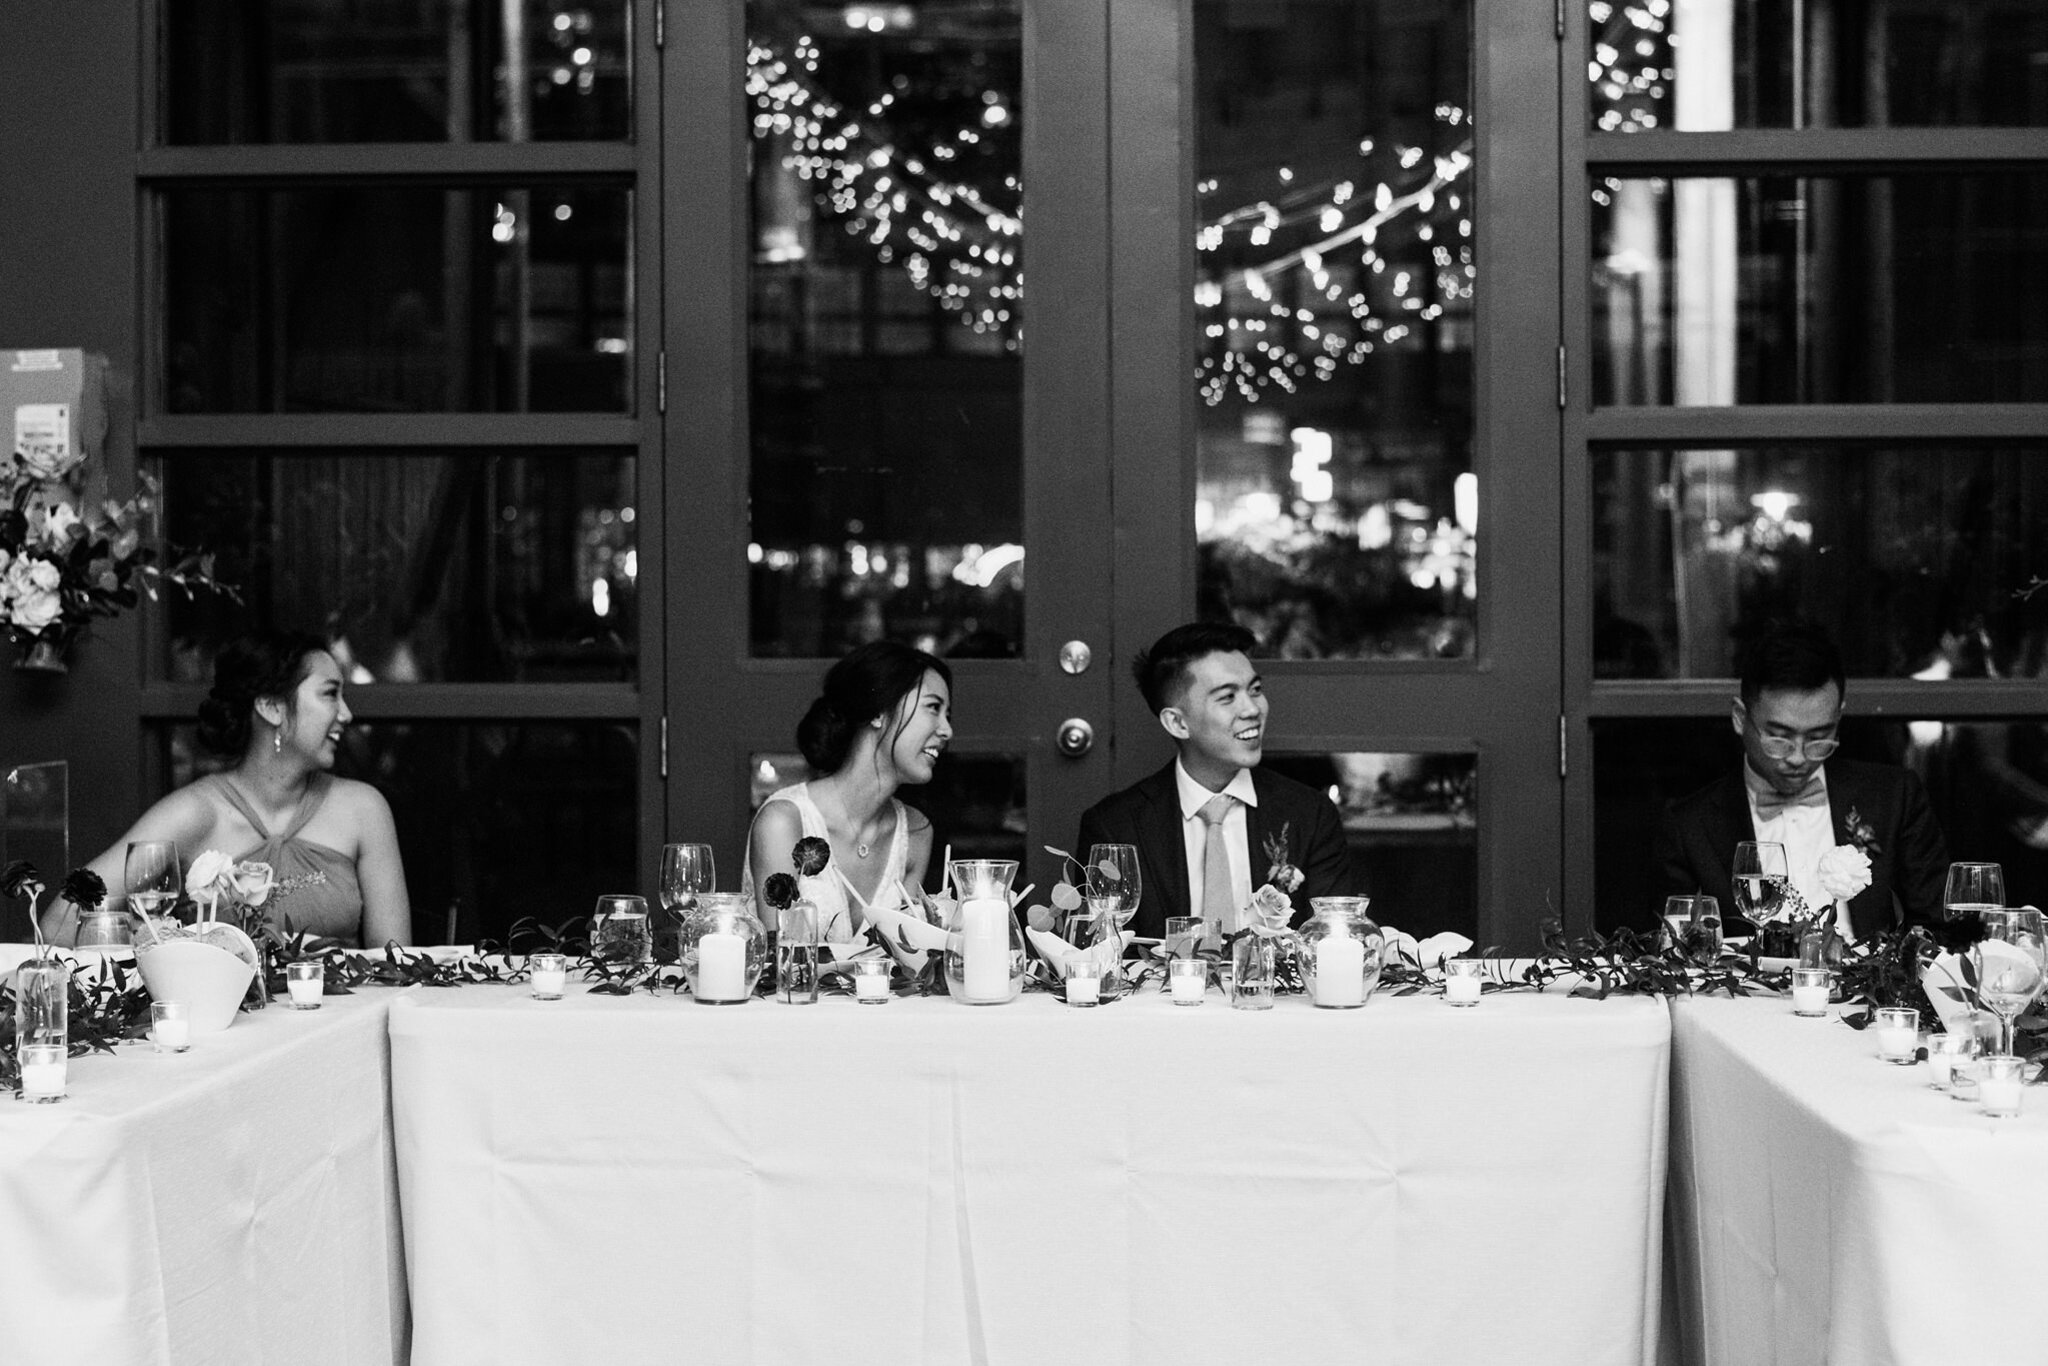 136-bridesmaids-steamwhistle-brewery-wedding-reception-ceremony-toronto-downtown-photographer.jpg